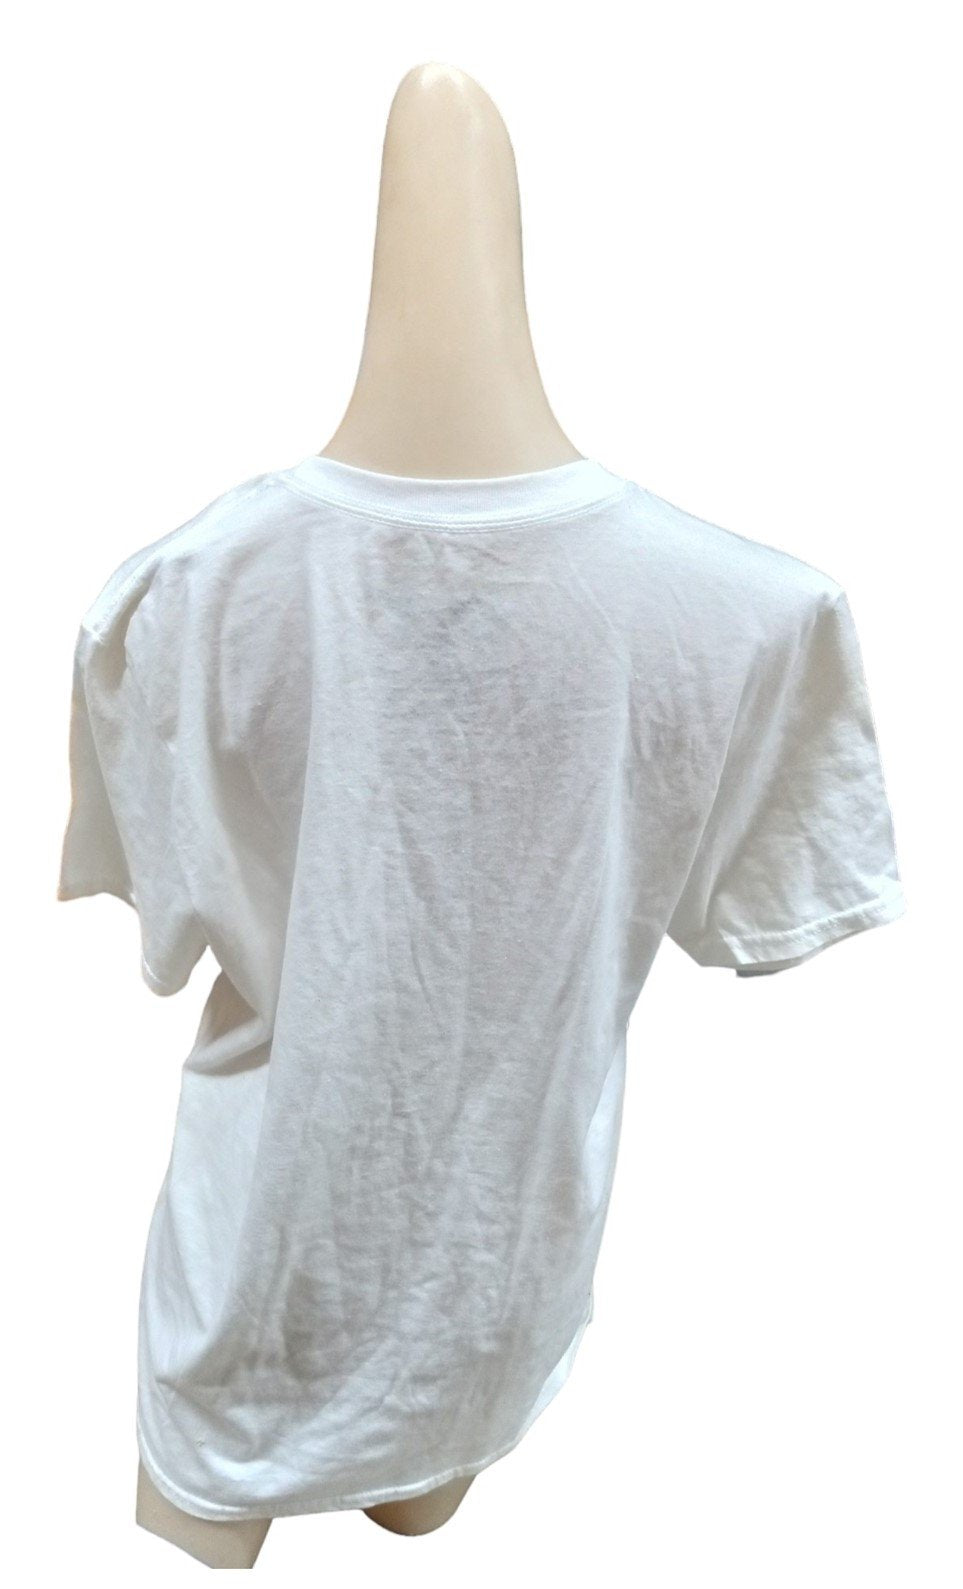 Motley Crue Graphic T-Shirt Clothing Collectible Music Memorabilia Merchandise